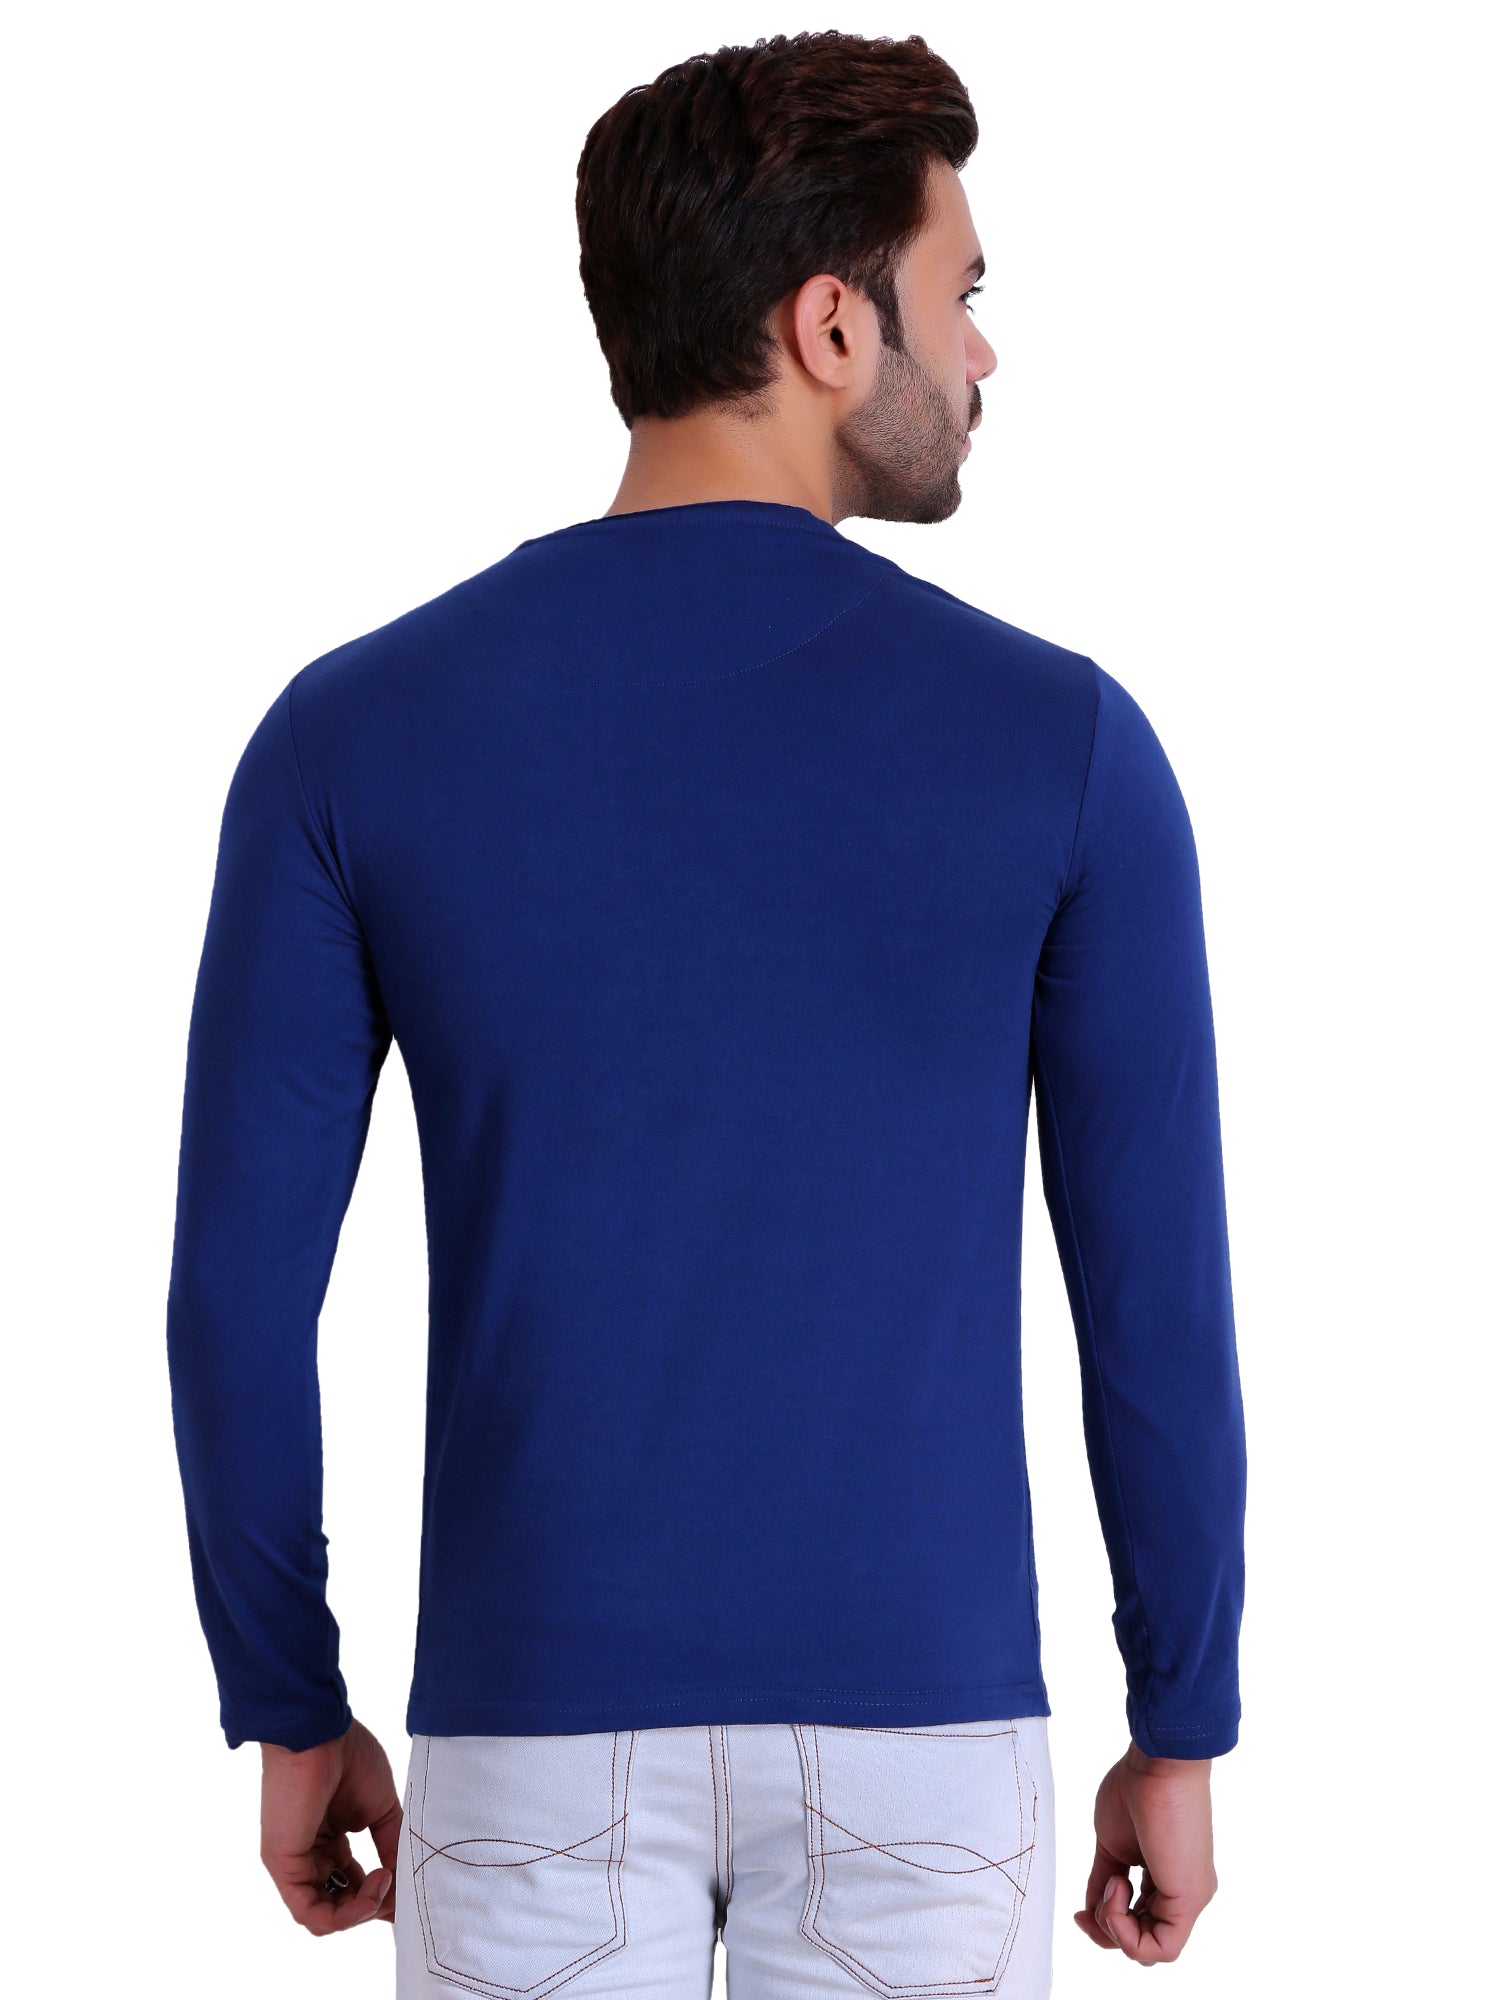 HiFlyers Men Round Neck Full Sleeve Solid Blue Tshirts